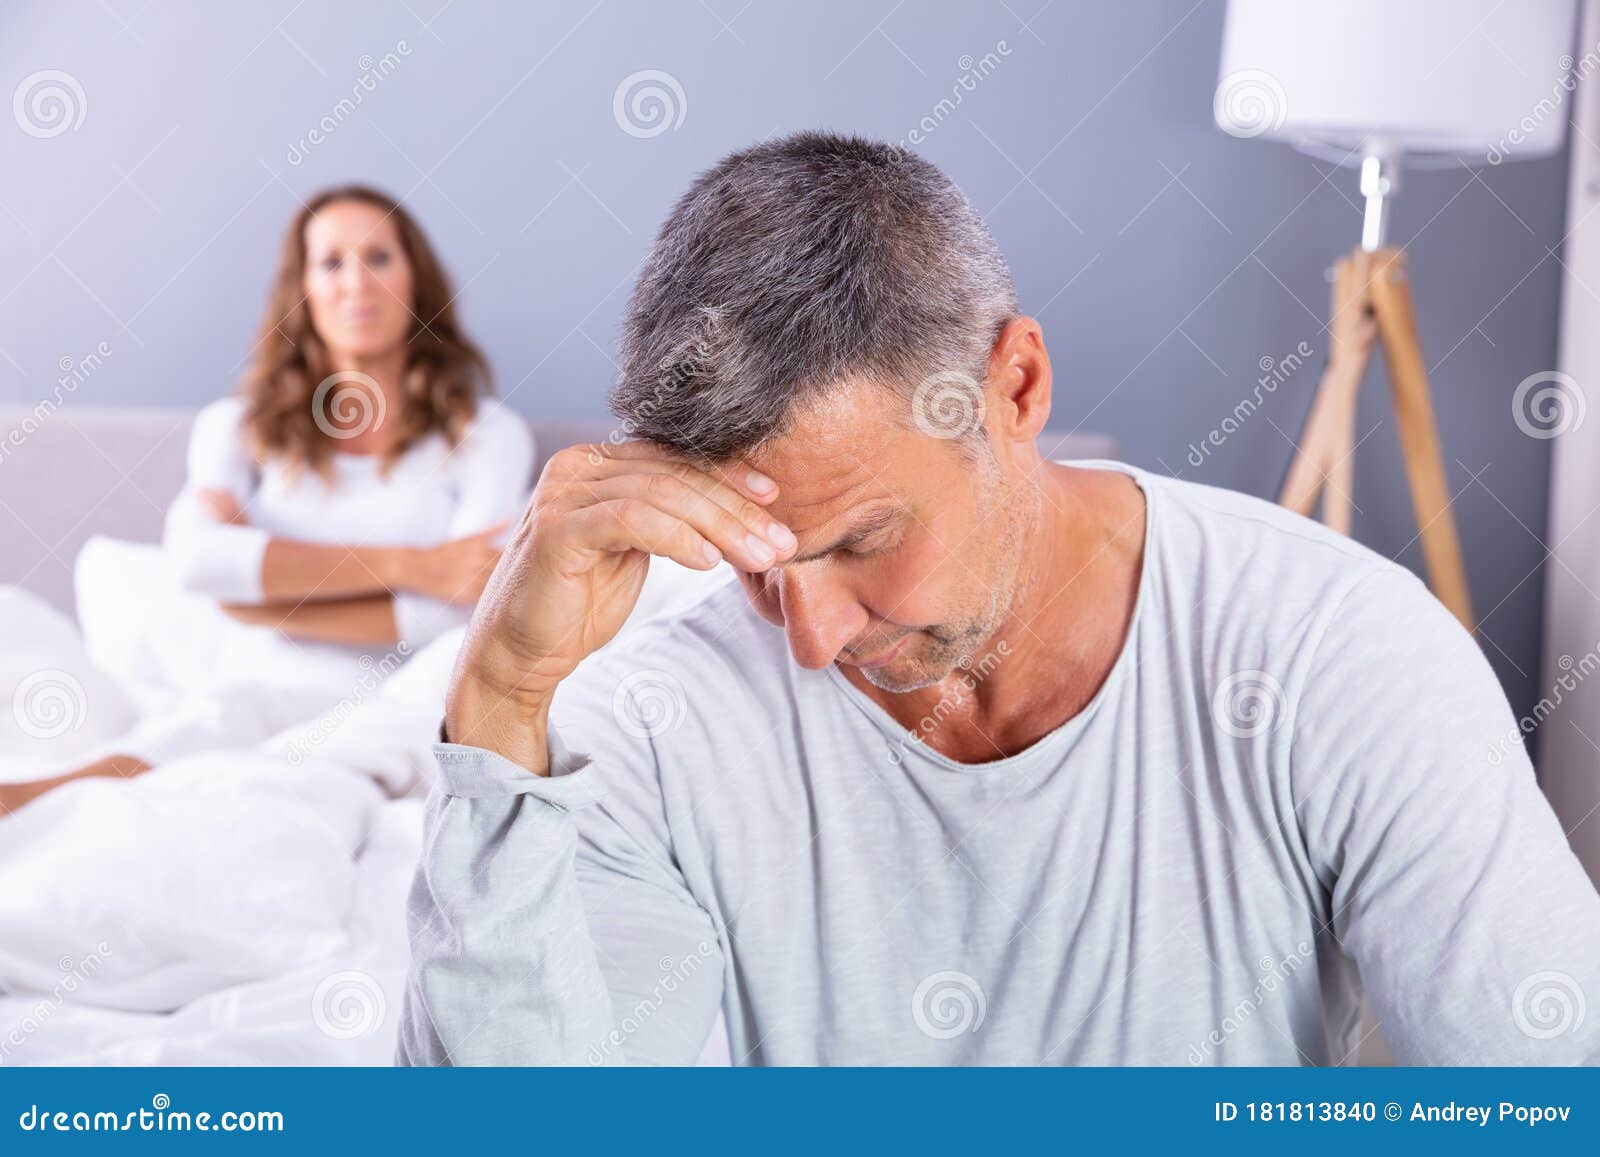 depressed man sitting on bed